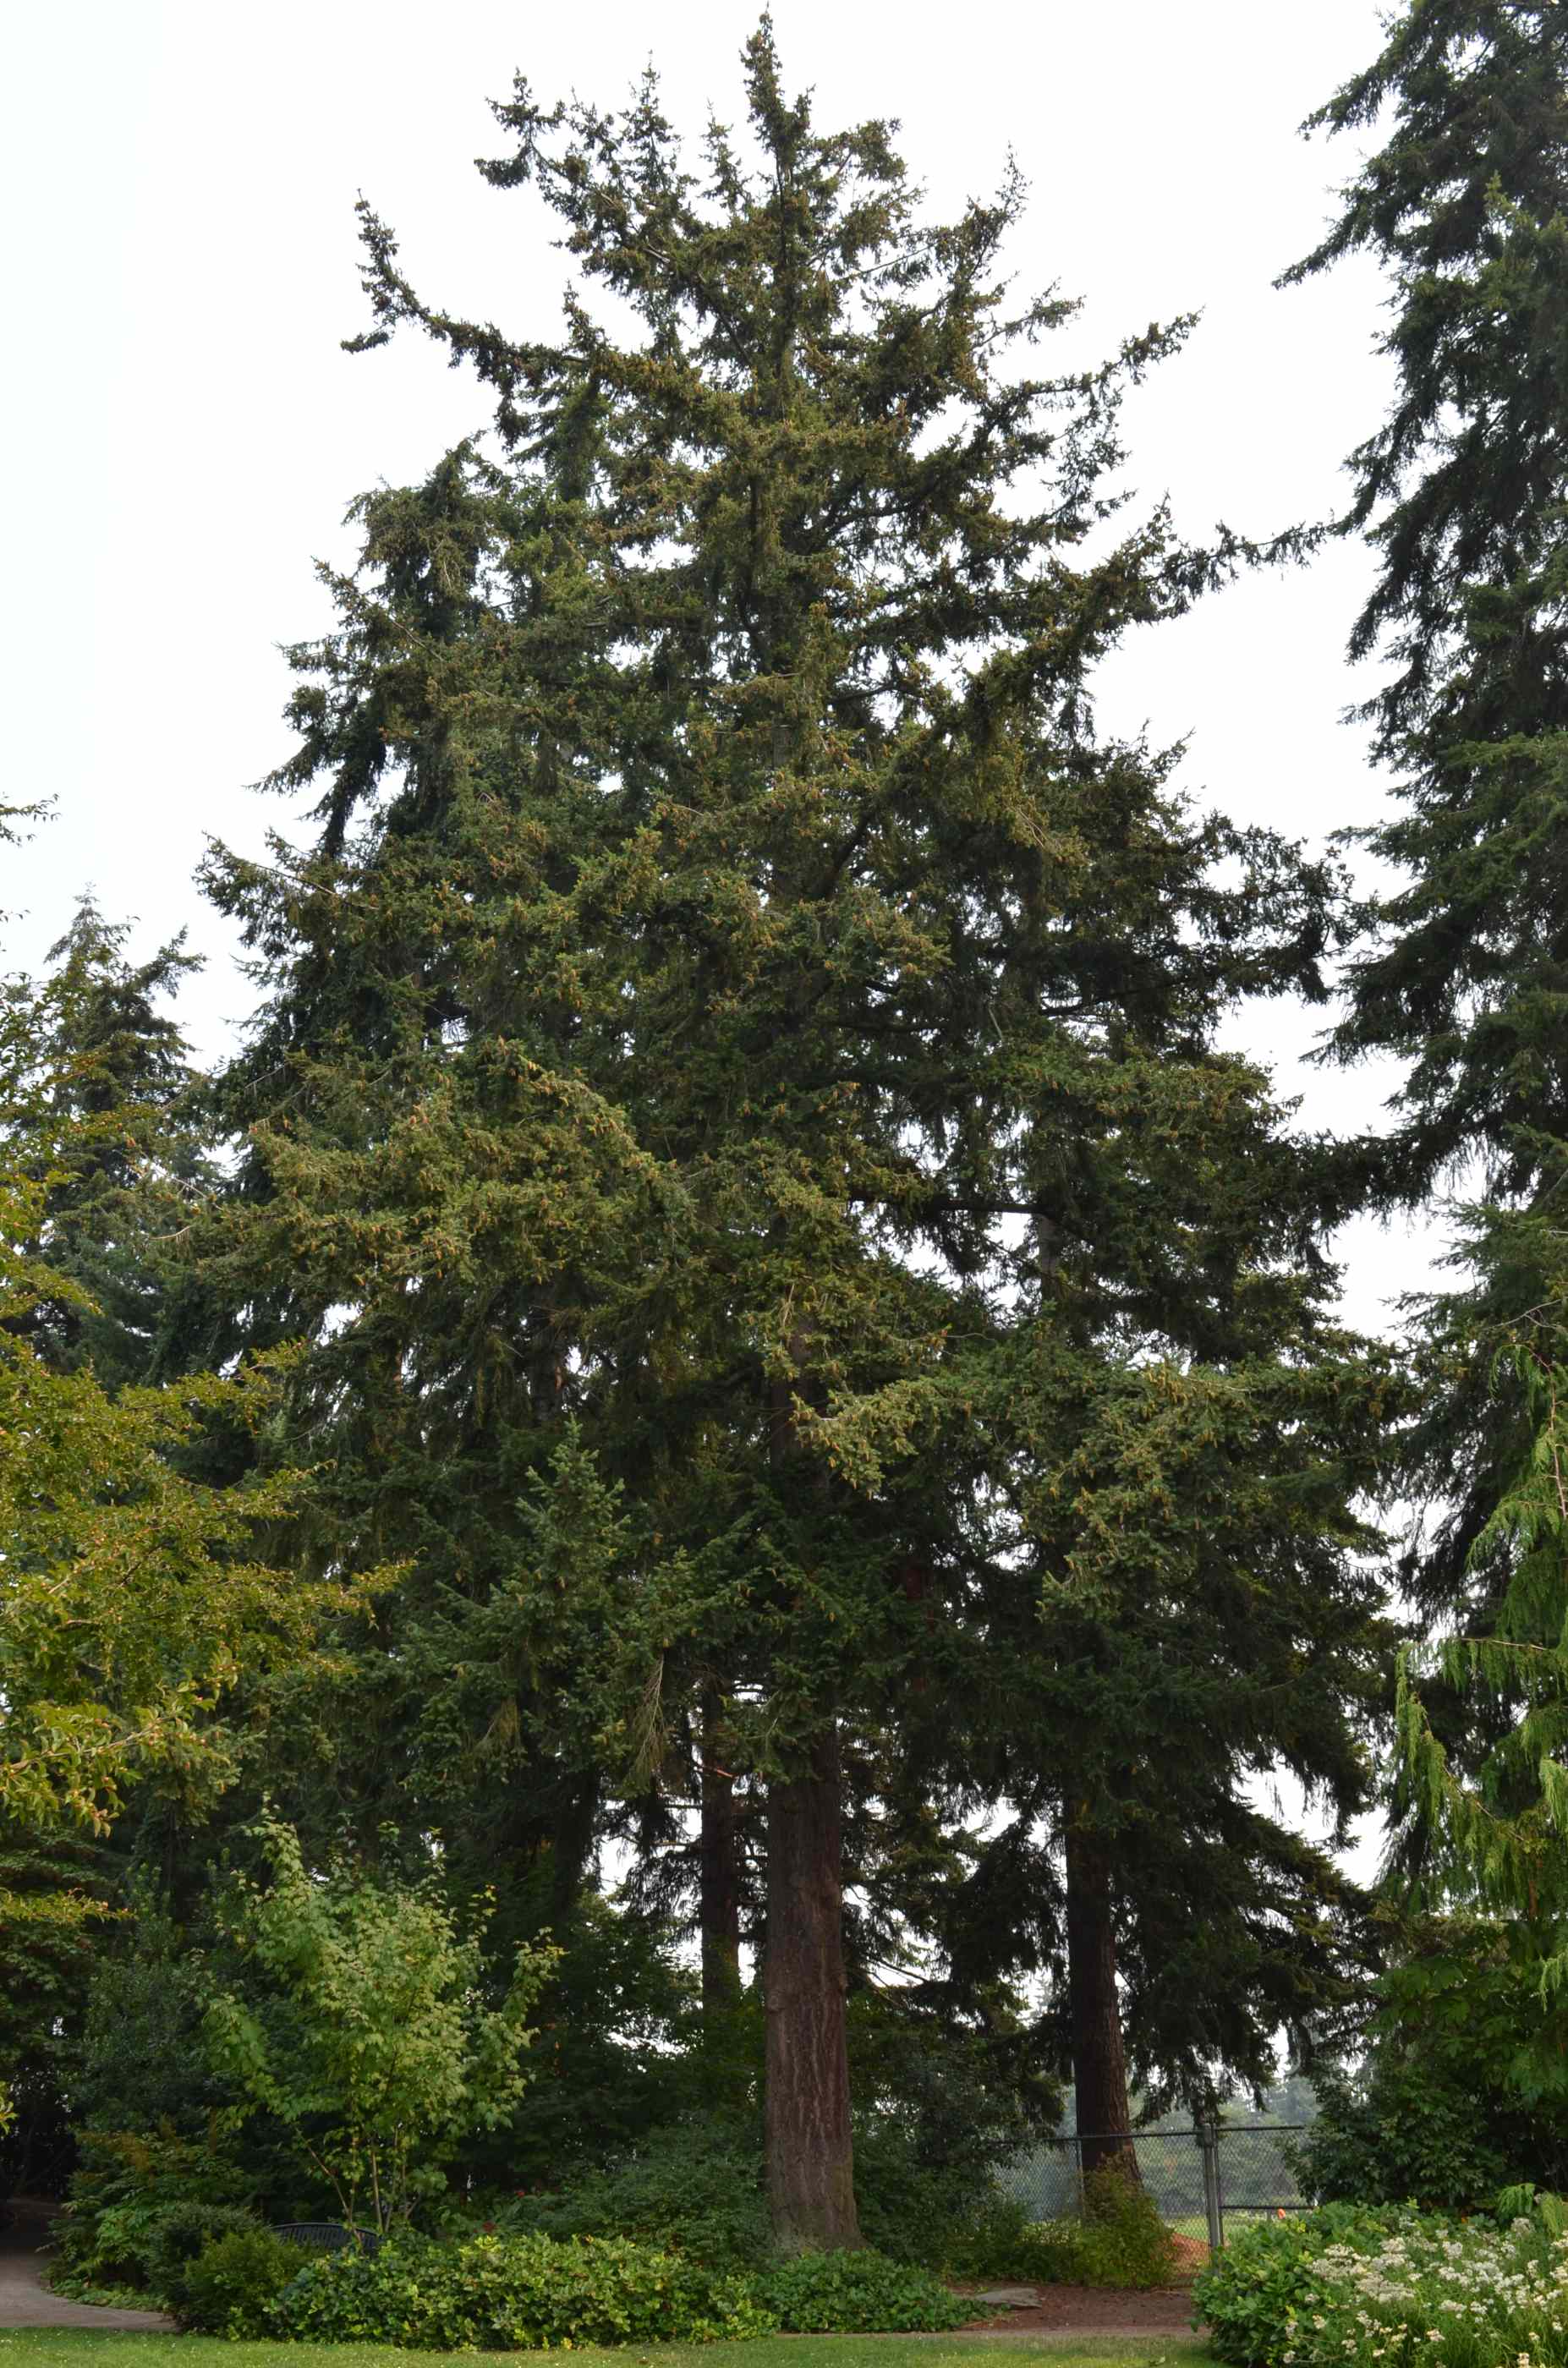 Pseudotsuga menziesii tree growing in a garden near Everett, Washington.